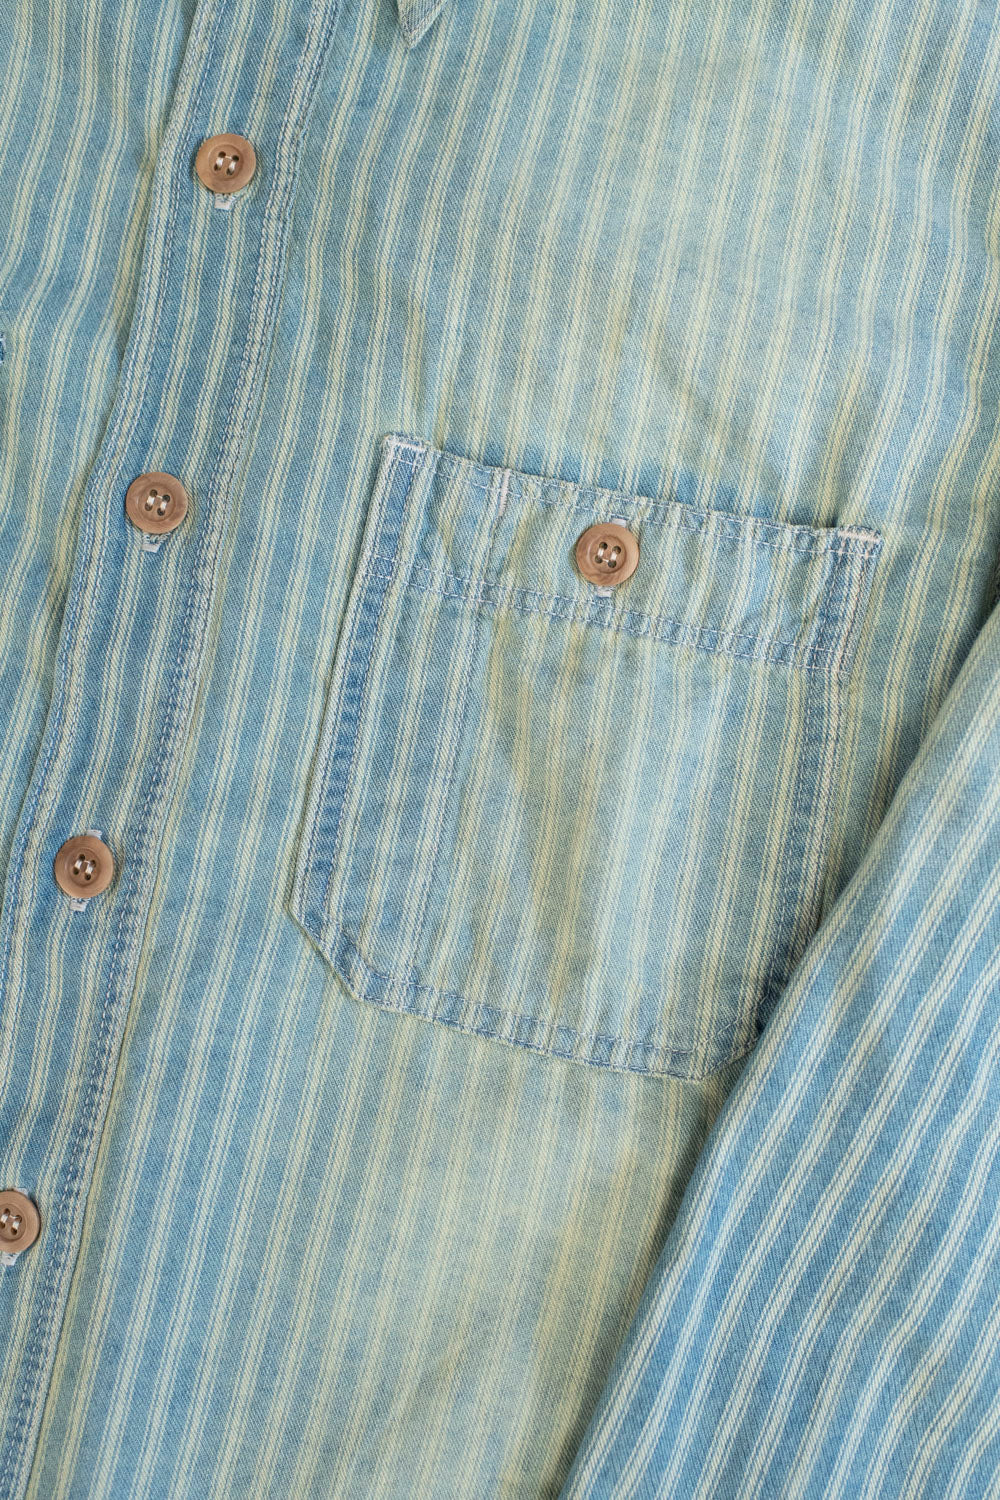 MLS1070M31 - Indigo Striped Work Shirt - Bleach Used